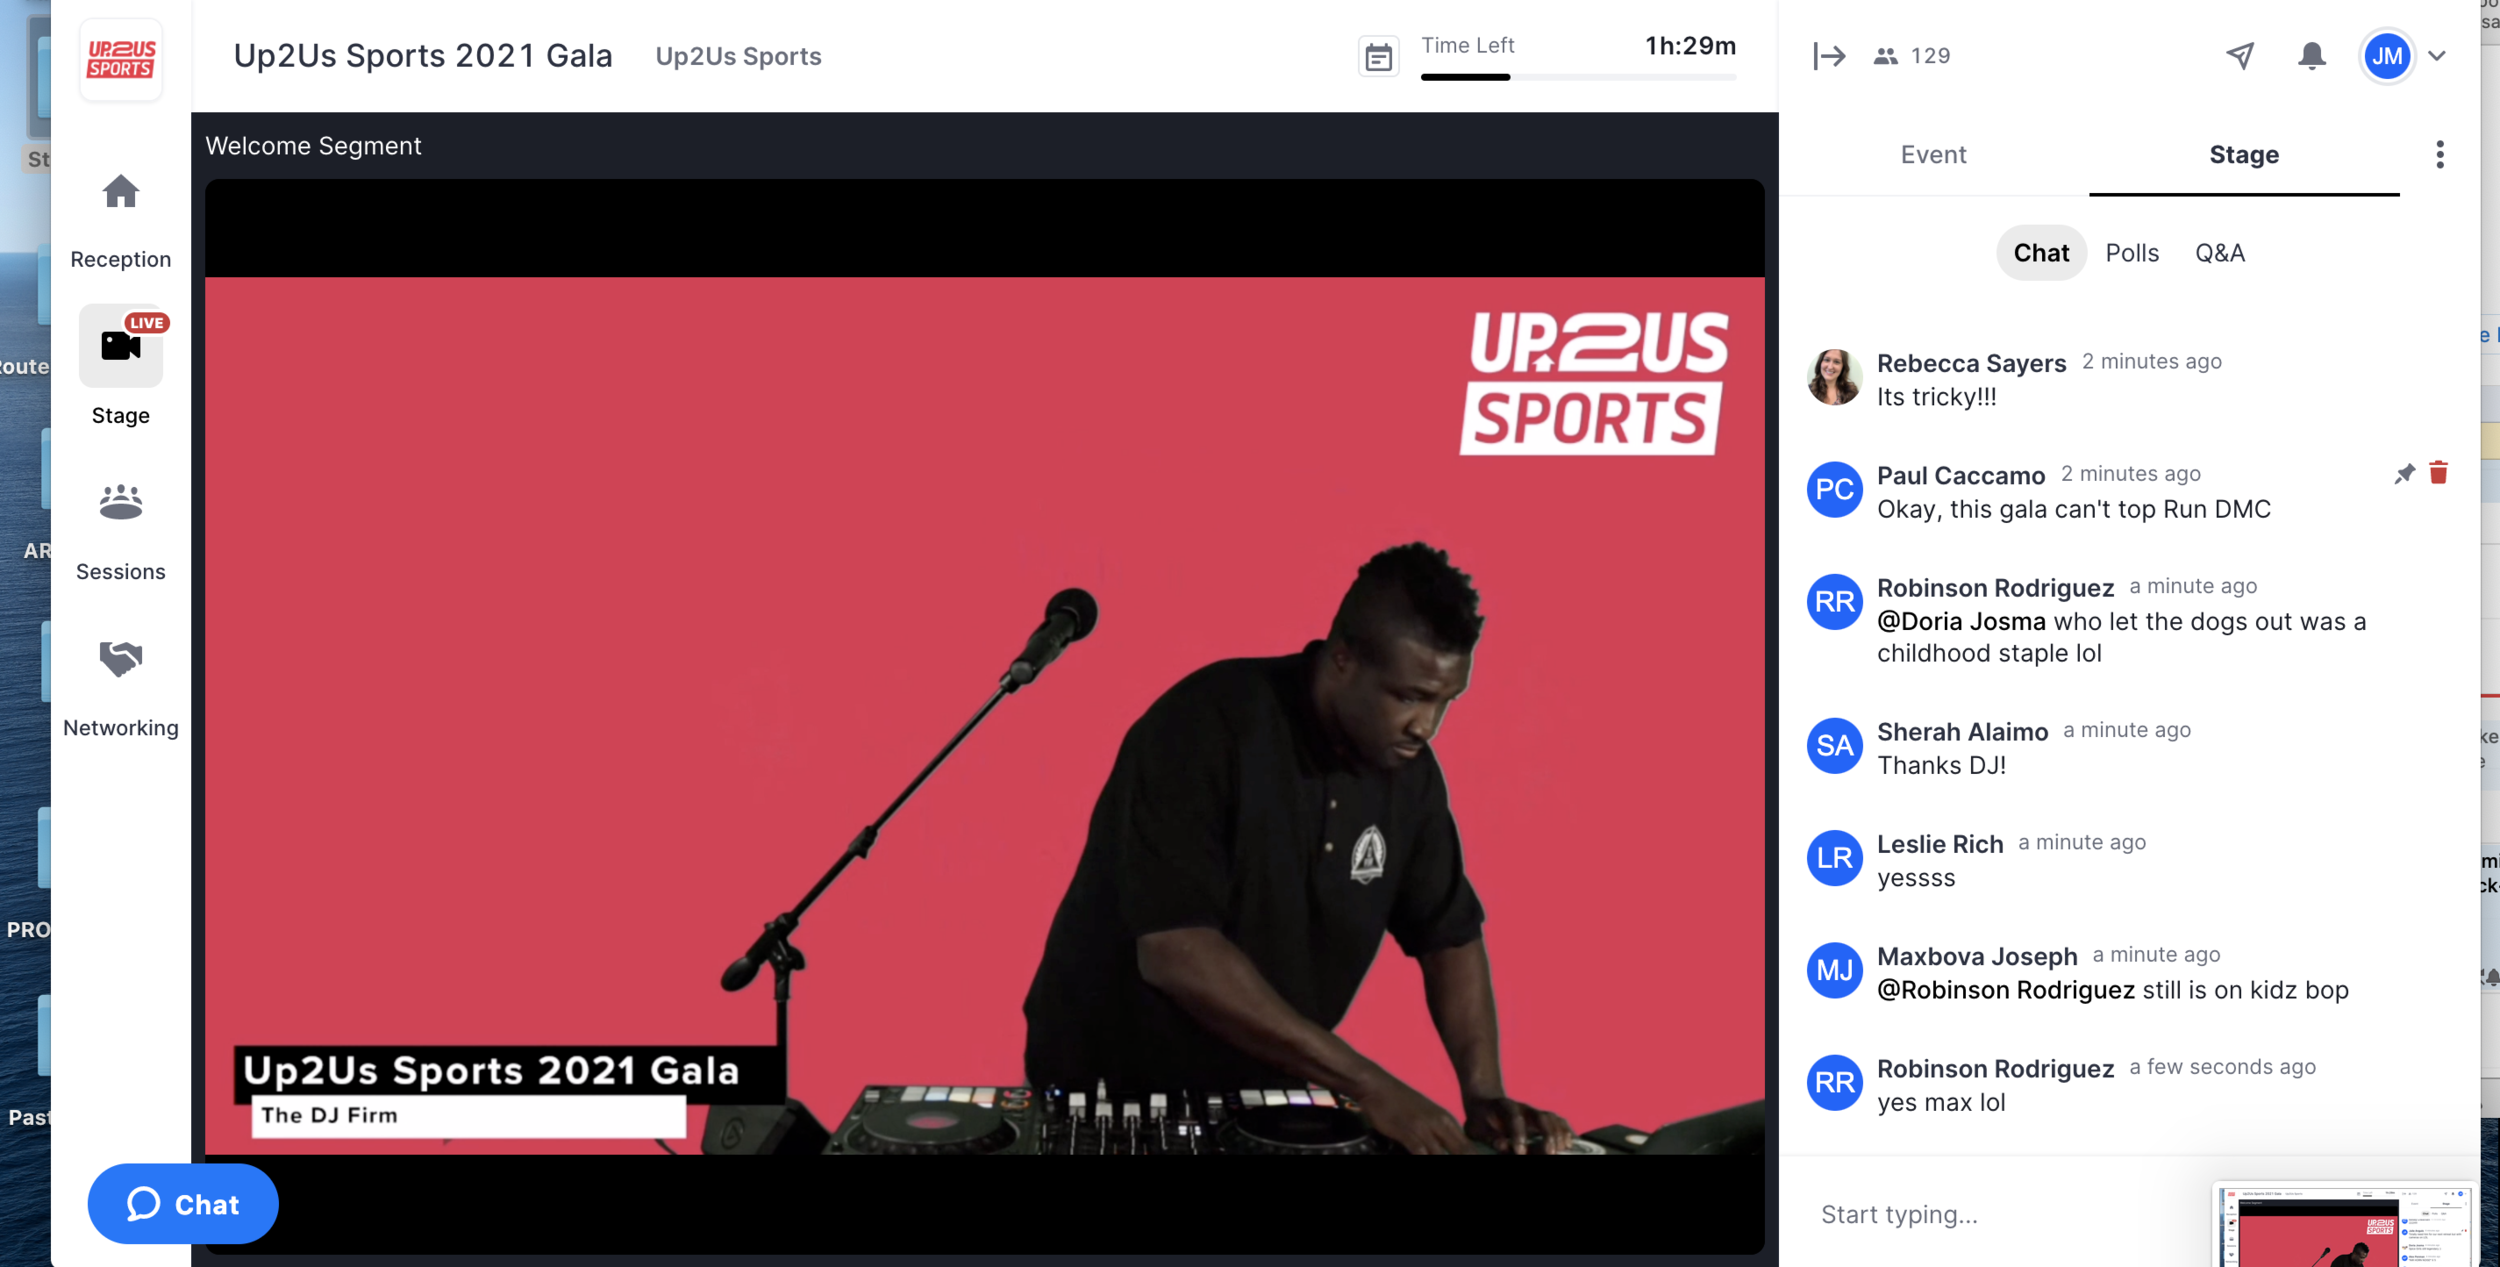 Up2Us Sports 2021 Gala - The DJ Firm